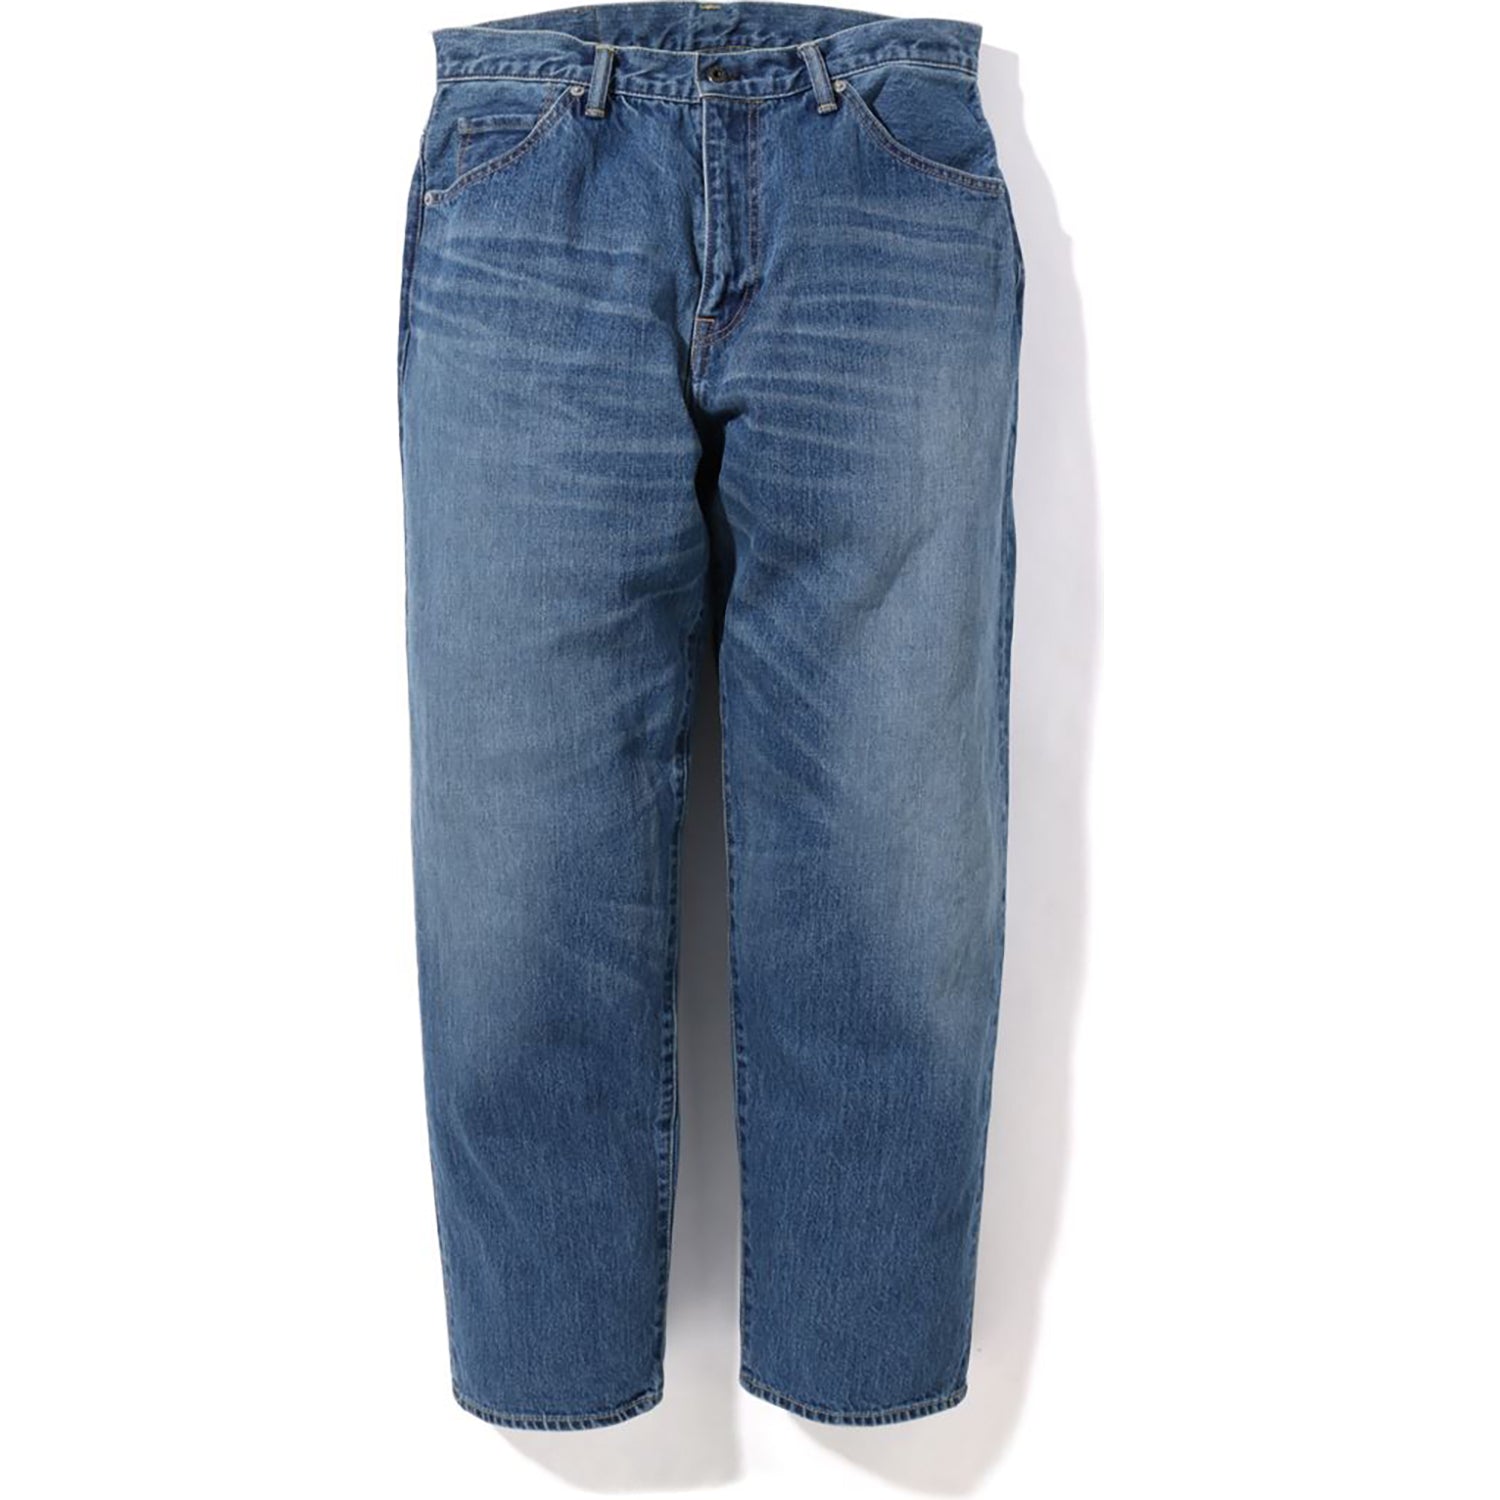 Levi's 501 Original Regular Fit Mens Jeans Onewash Blue Levis Denim Pants |  eBay